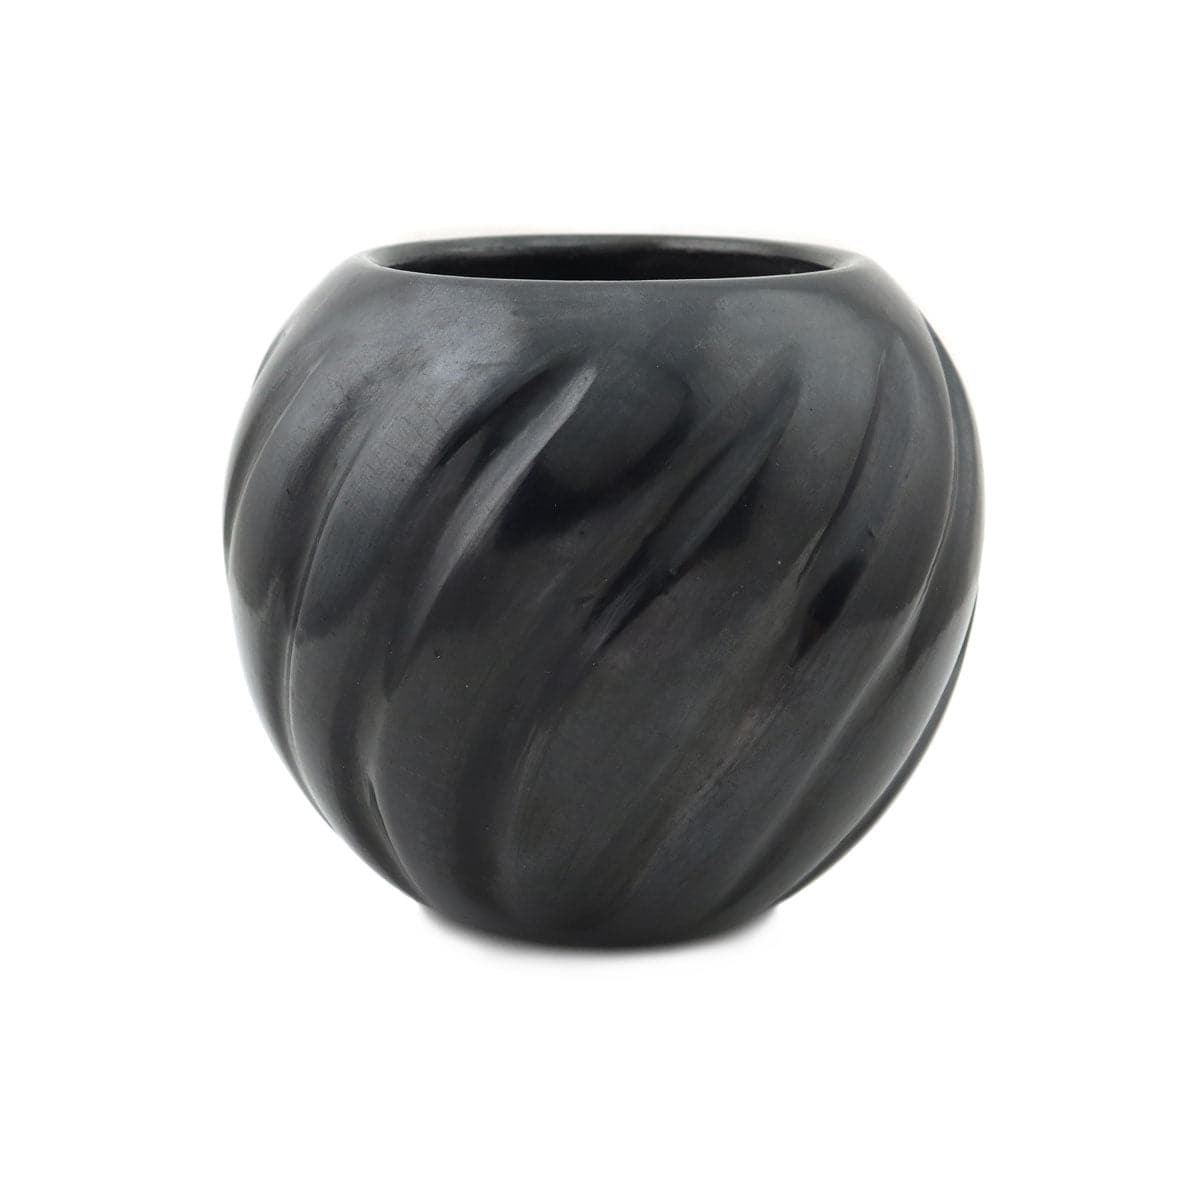 Mary Cain (1915-2010) - Santa Clara Black Jar with Swirl Design c. 1970-80s, 4" x 4.5" (P3500-CO) 2